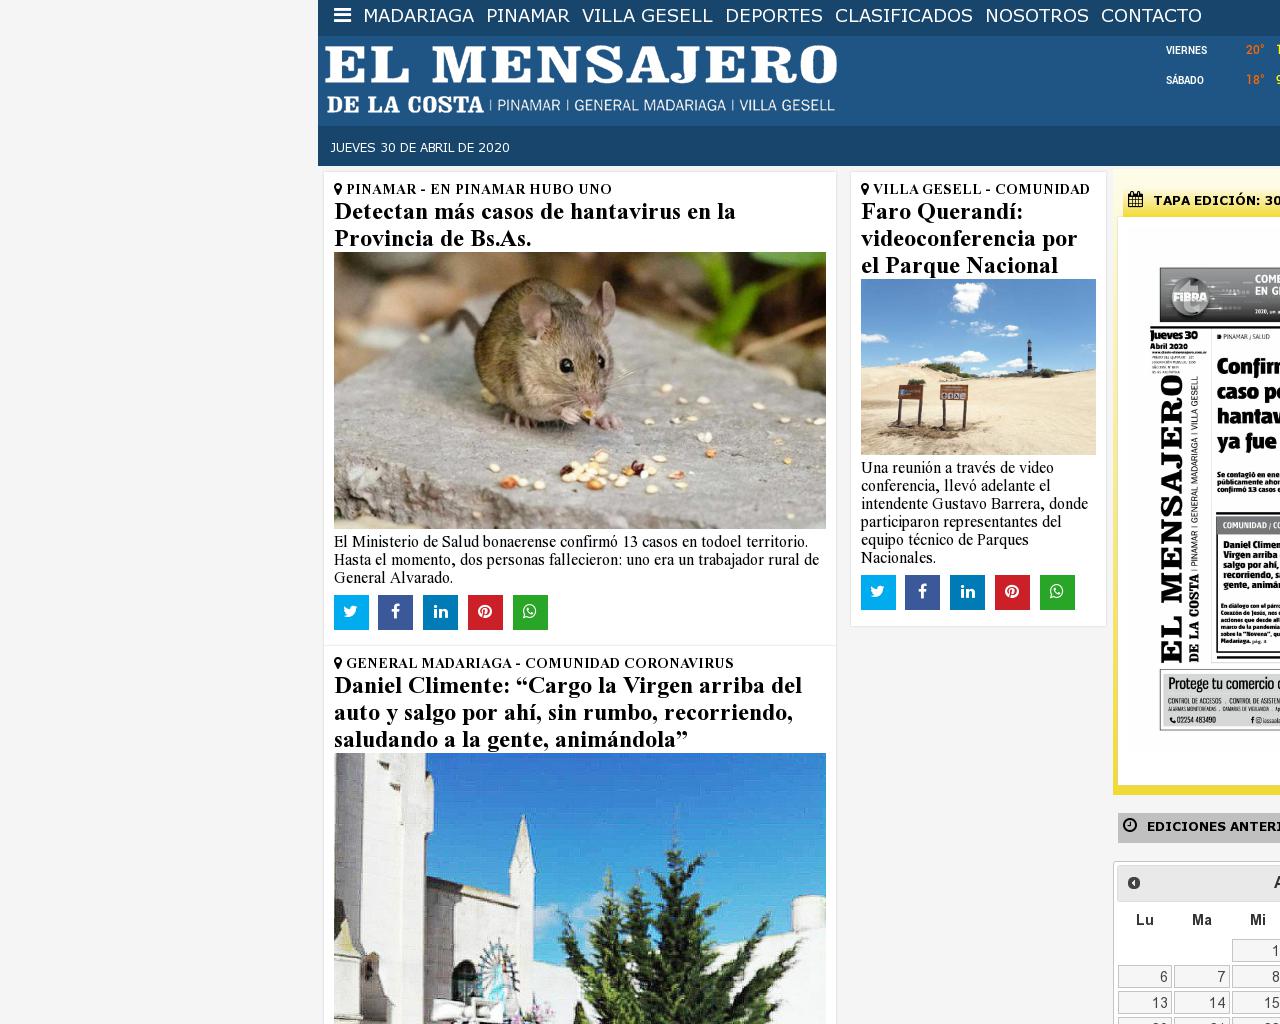 diario-elmensajero.com.ar